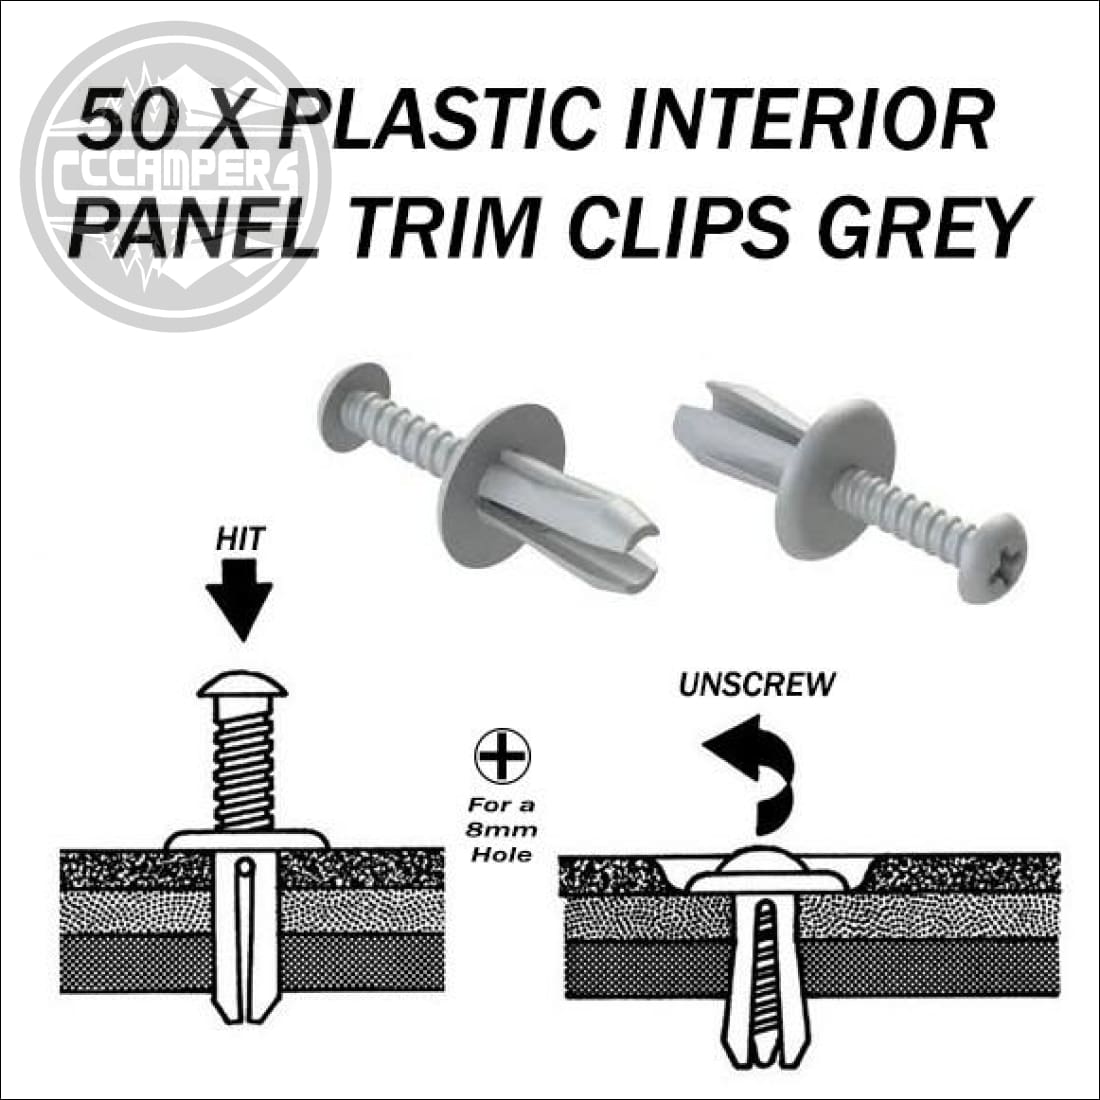 50 x Plastic Interior Panel Trim Clips black or grey - cccampers.myshopify.com